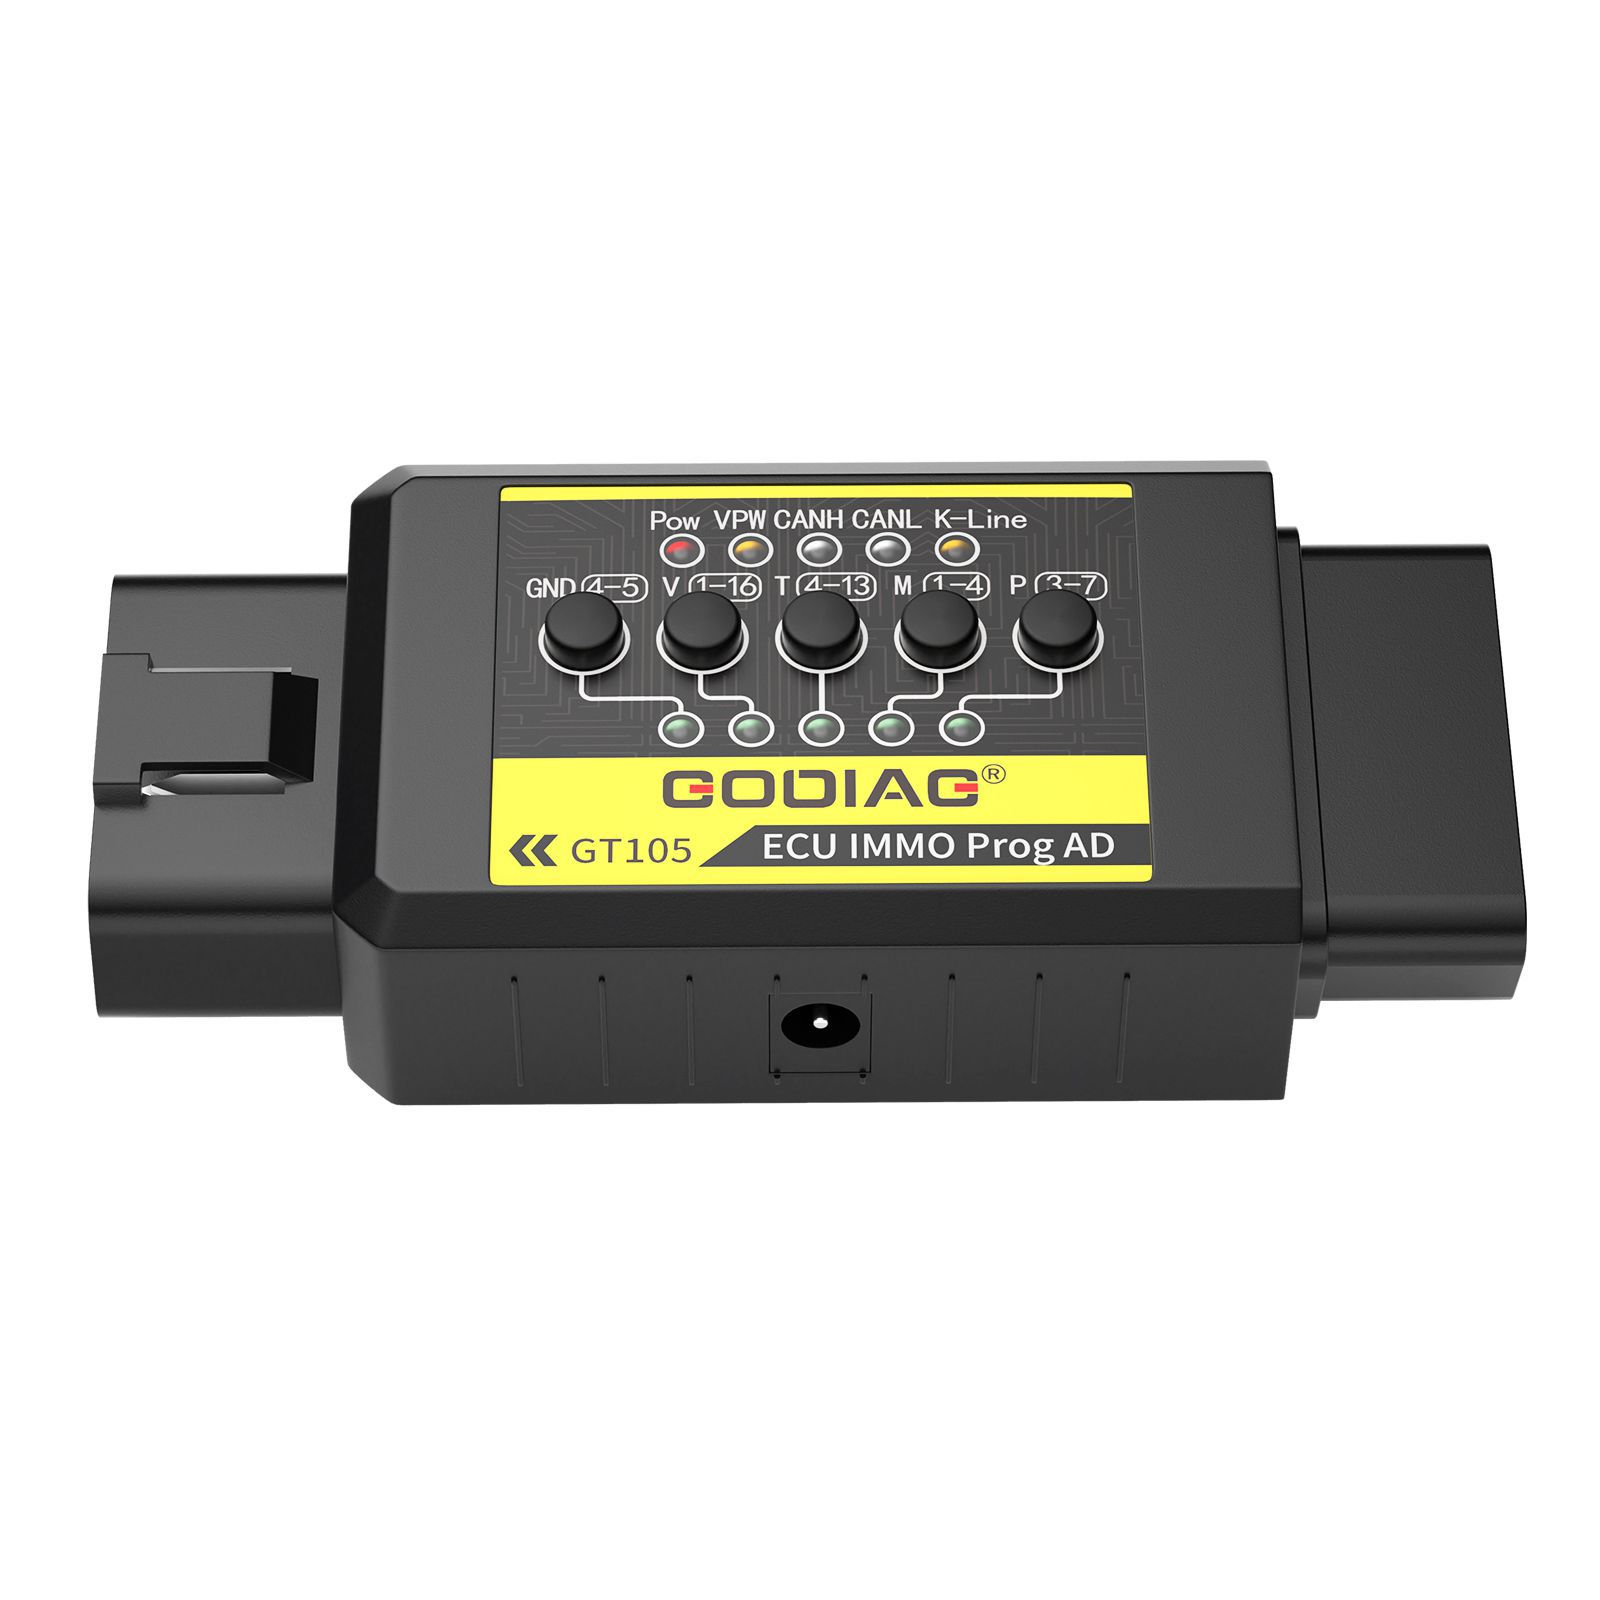 2022 dernier connecteur goldiag gt105 obd II Tap Box obd Auxiliary ECU immo prog ad Ecu